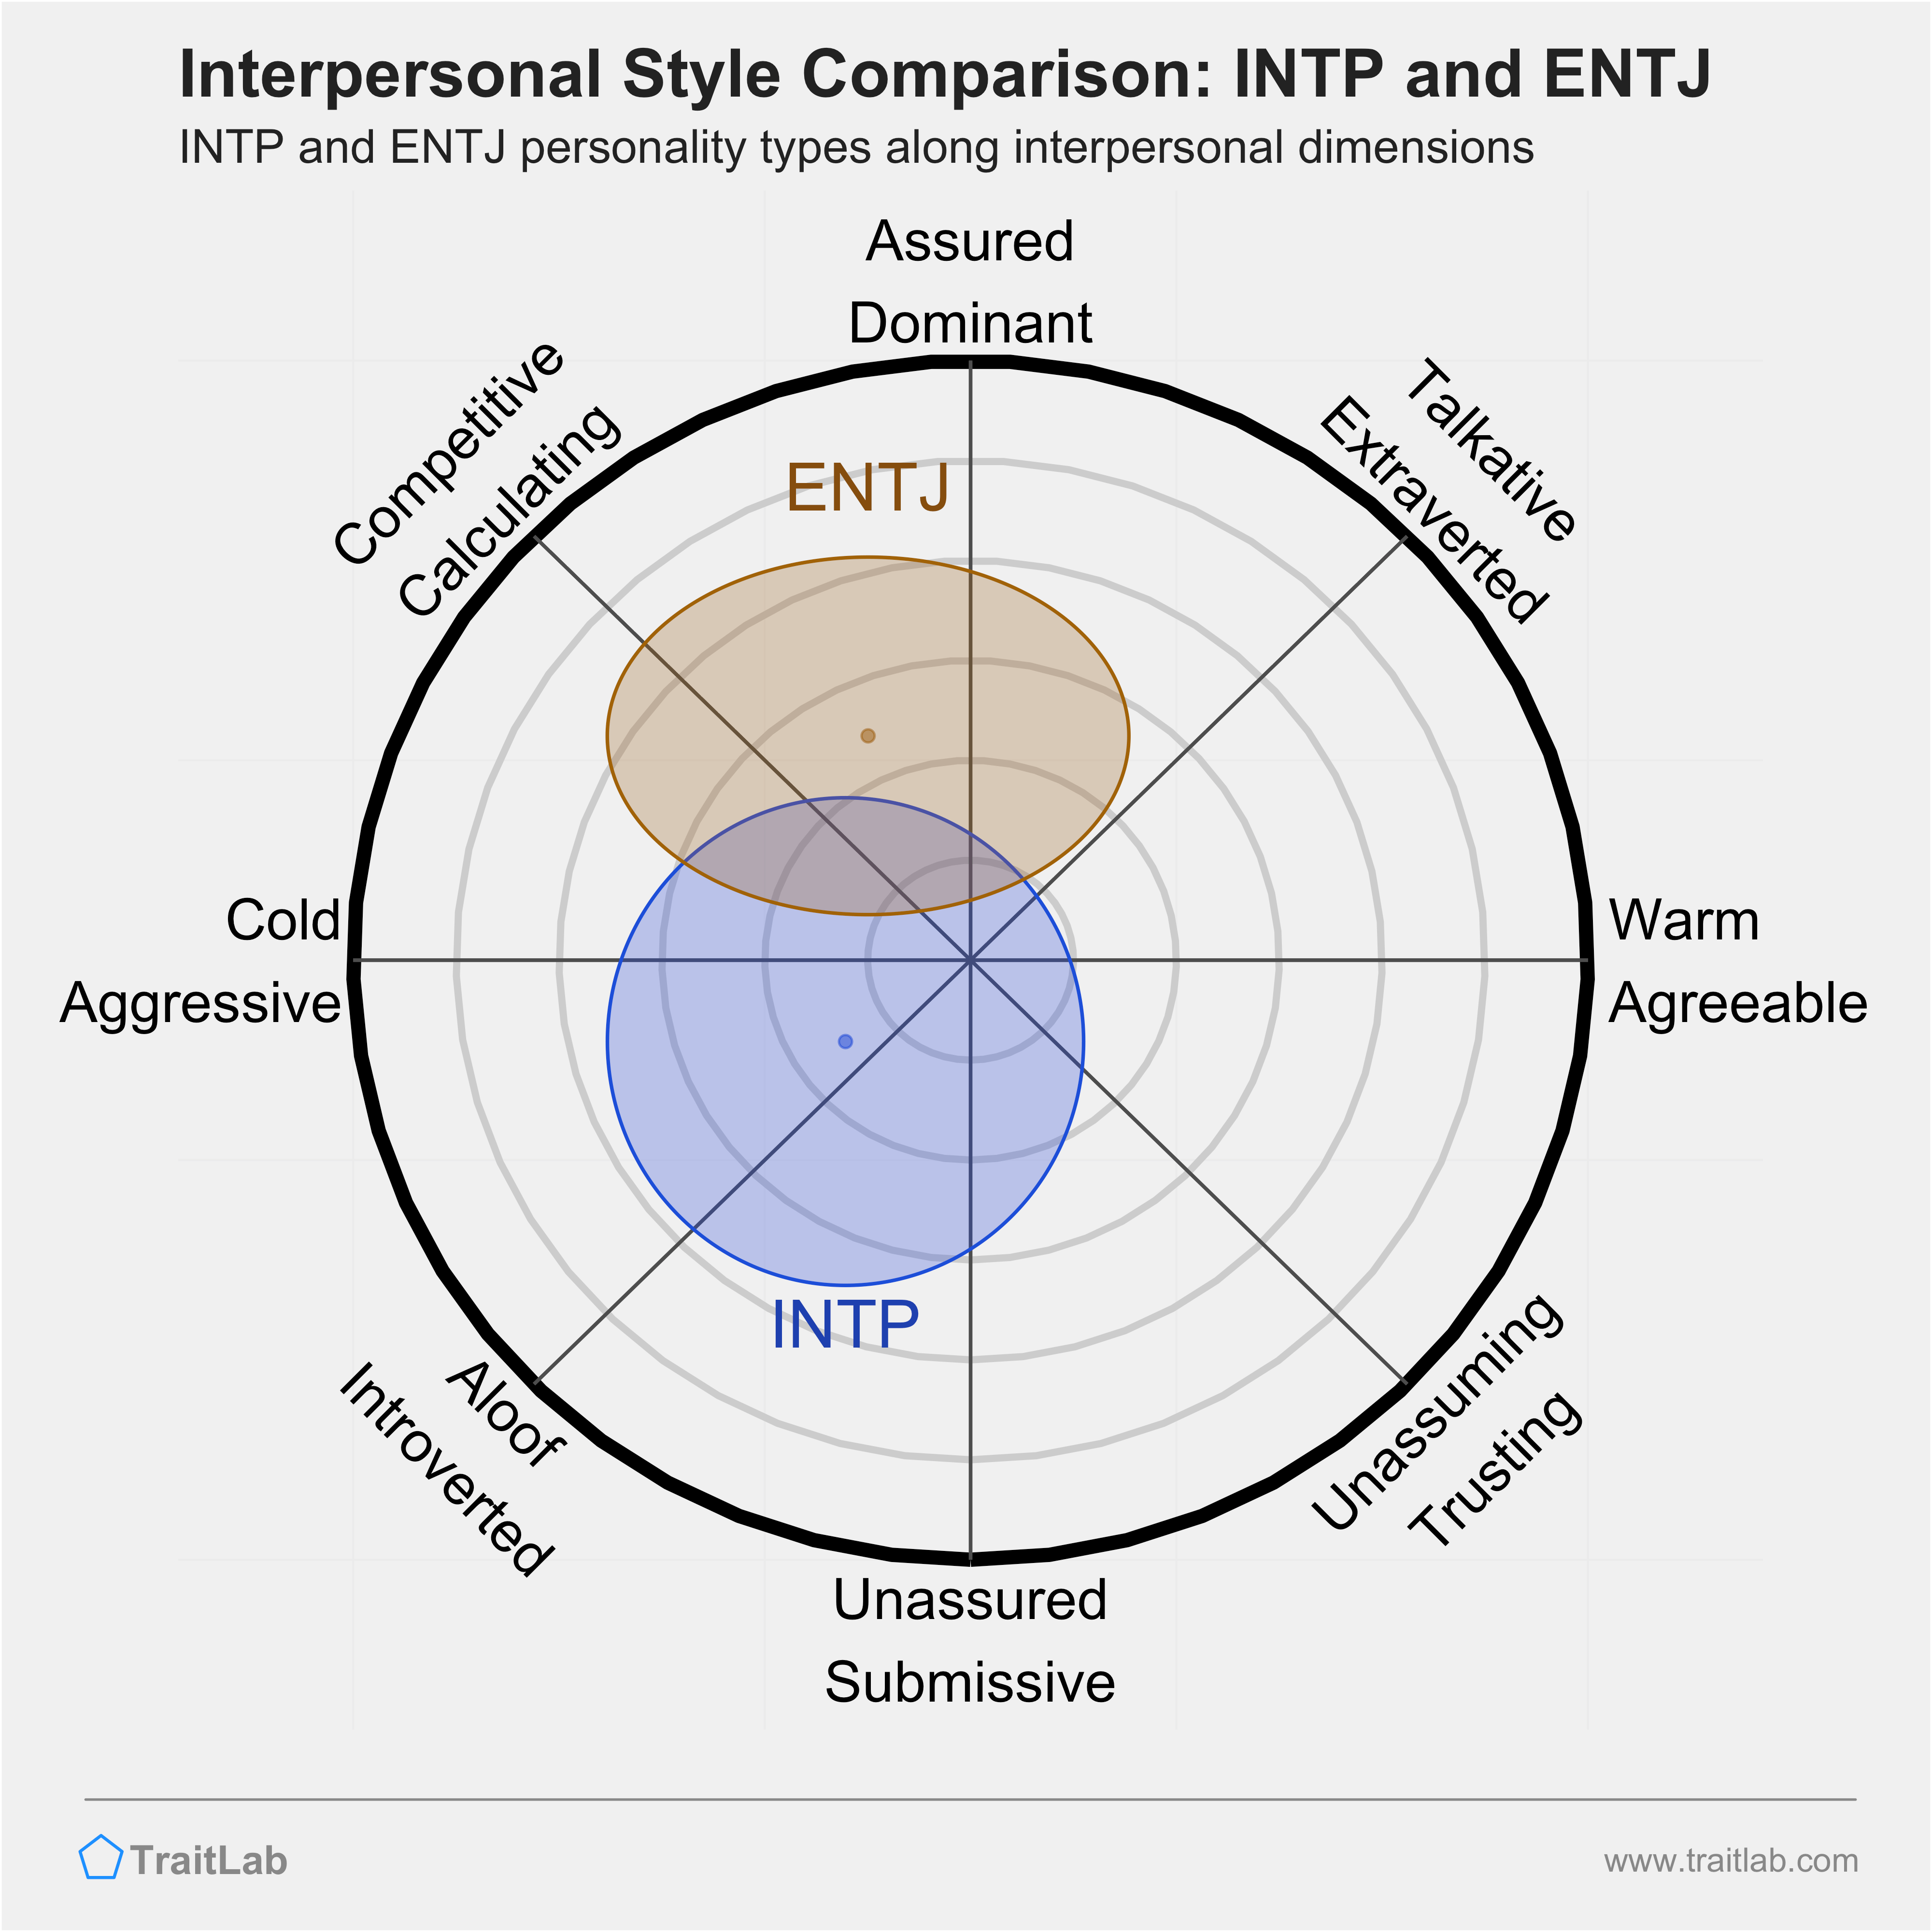 INTP and ENTJ comparison across interpersonal dimensions